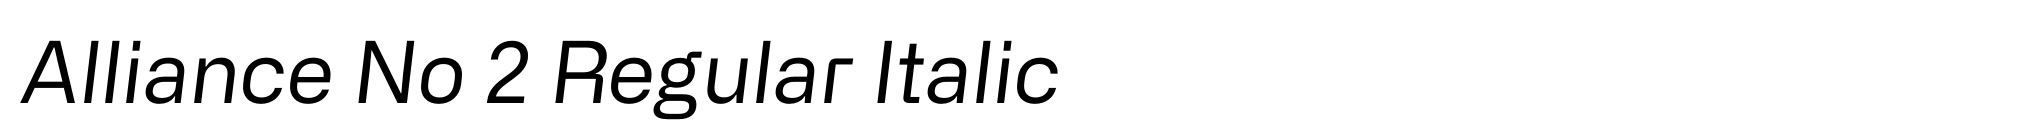 Alliance No 2 Regular Italic image